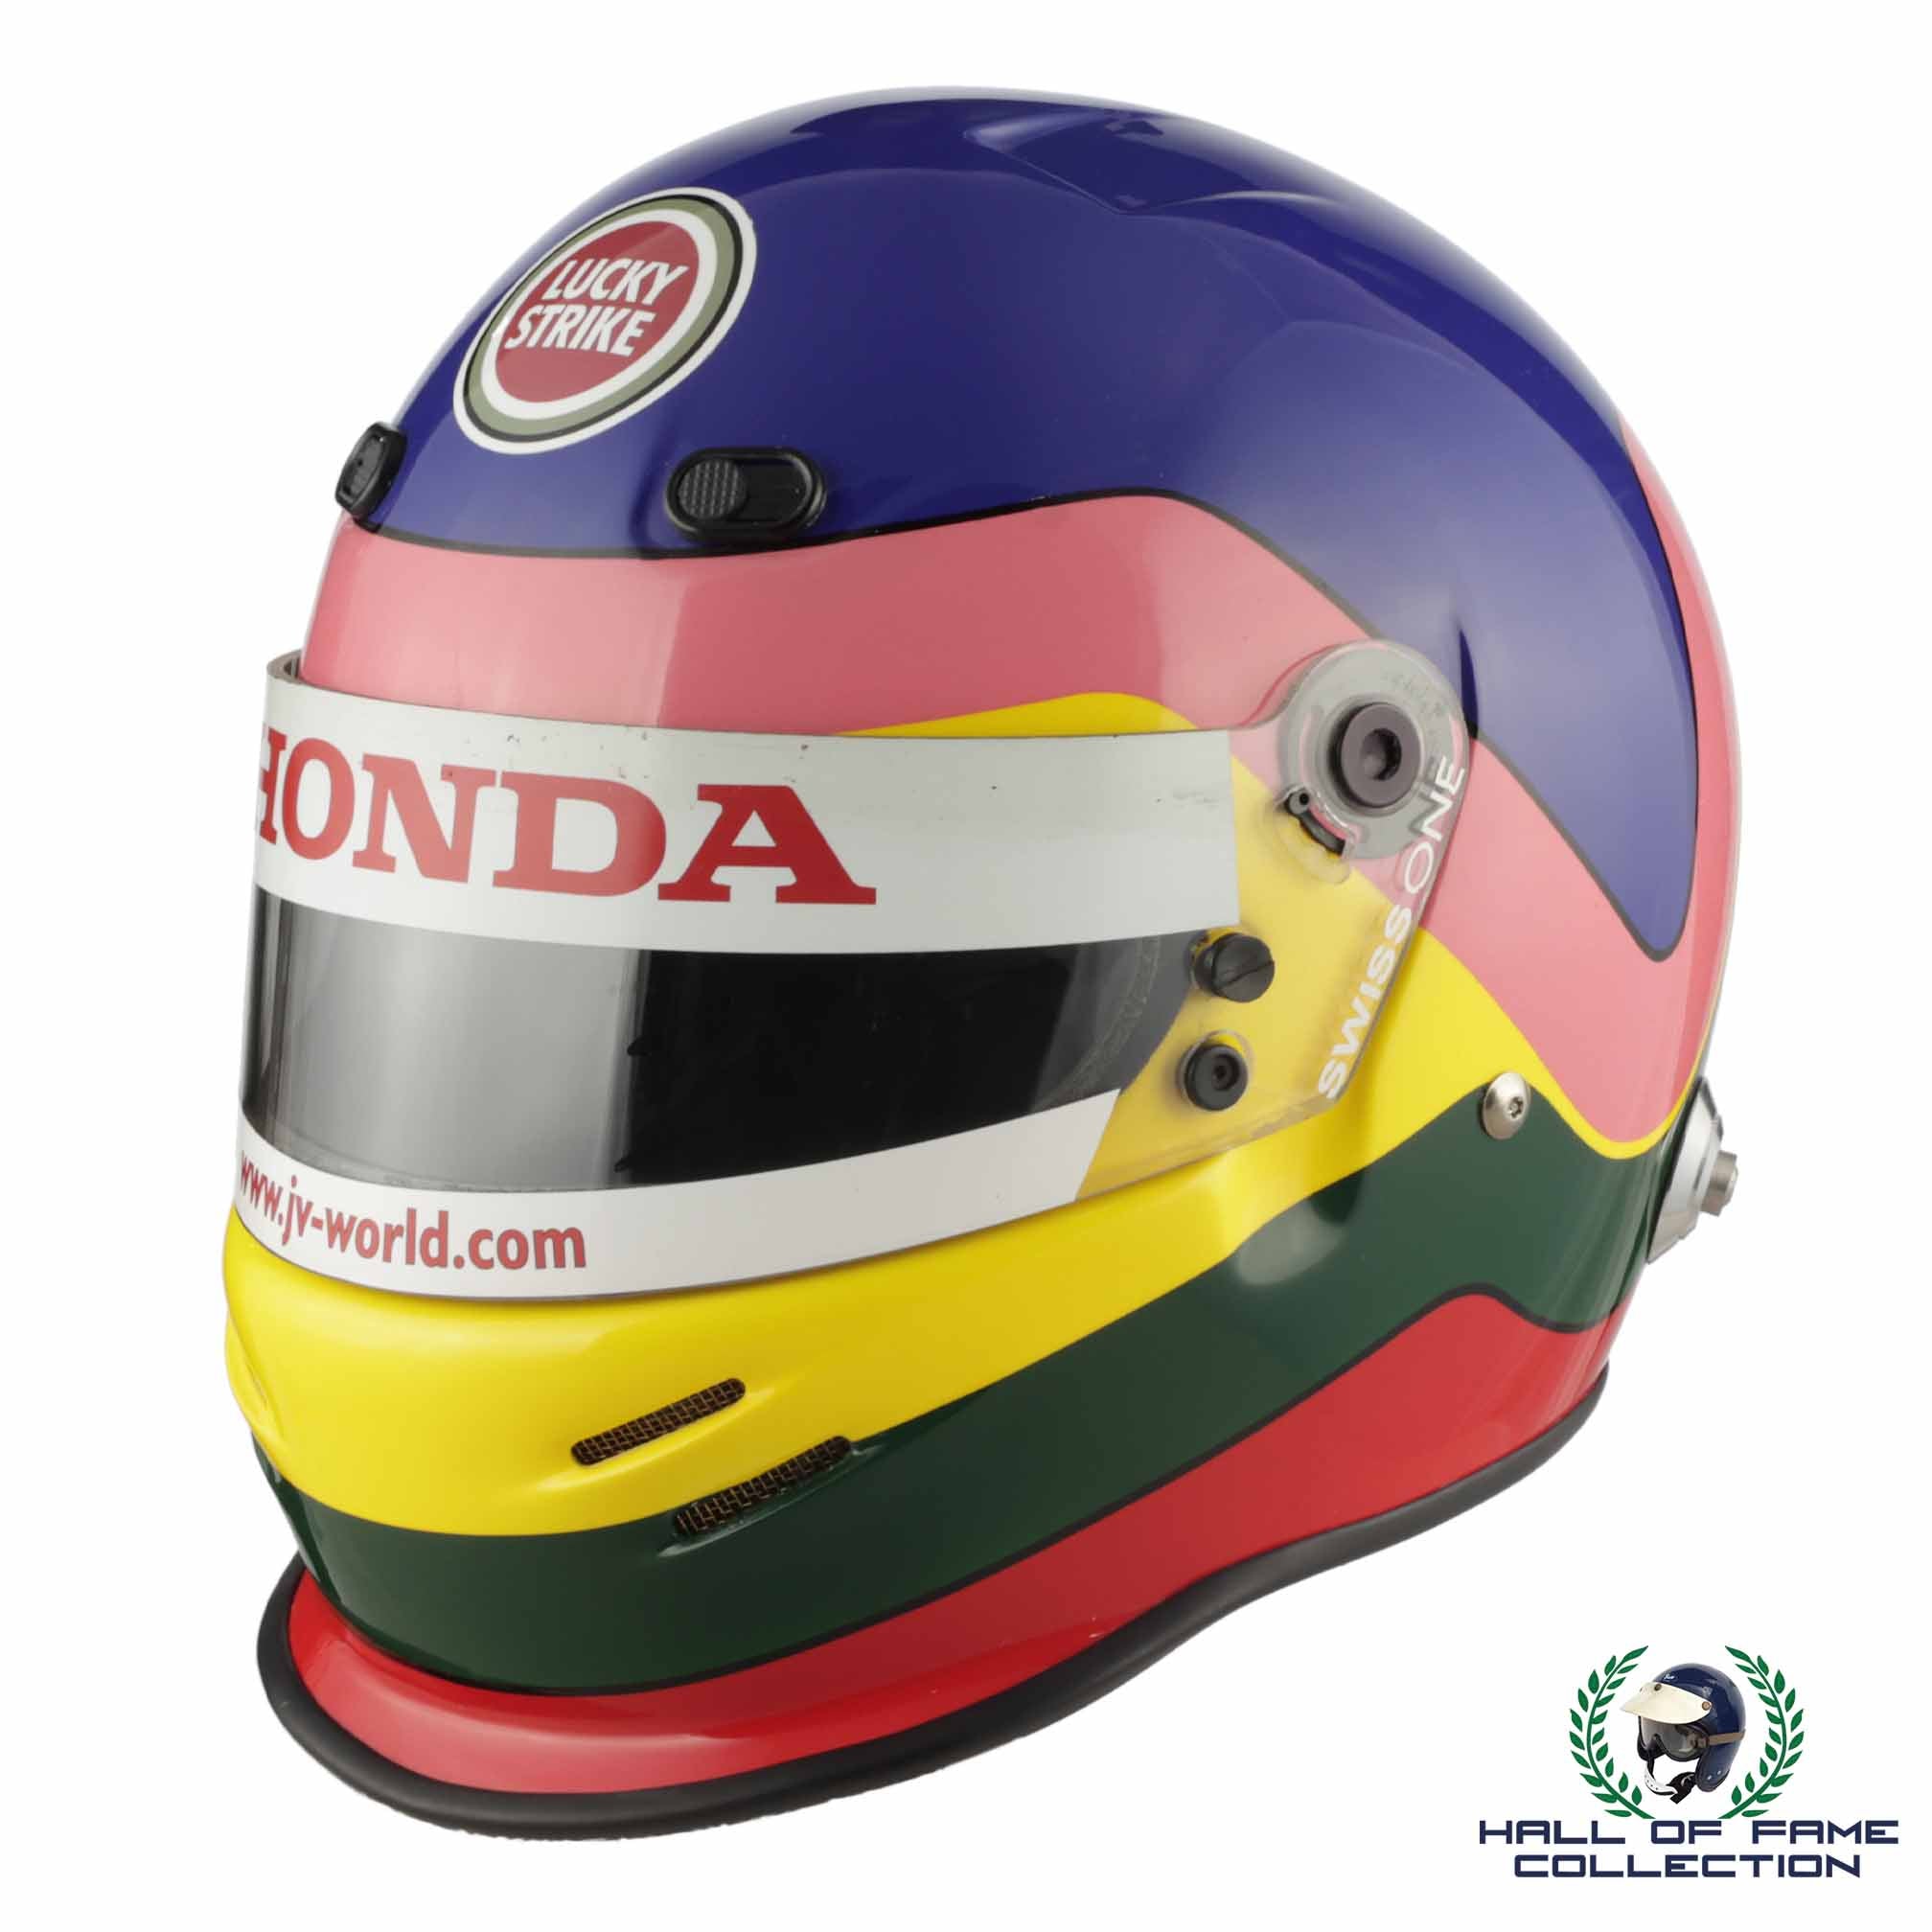 2003 Jacques Villeneuve BAR Honda Replica F1 Helmet With Signed Race Used F1 Visor